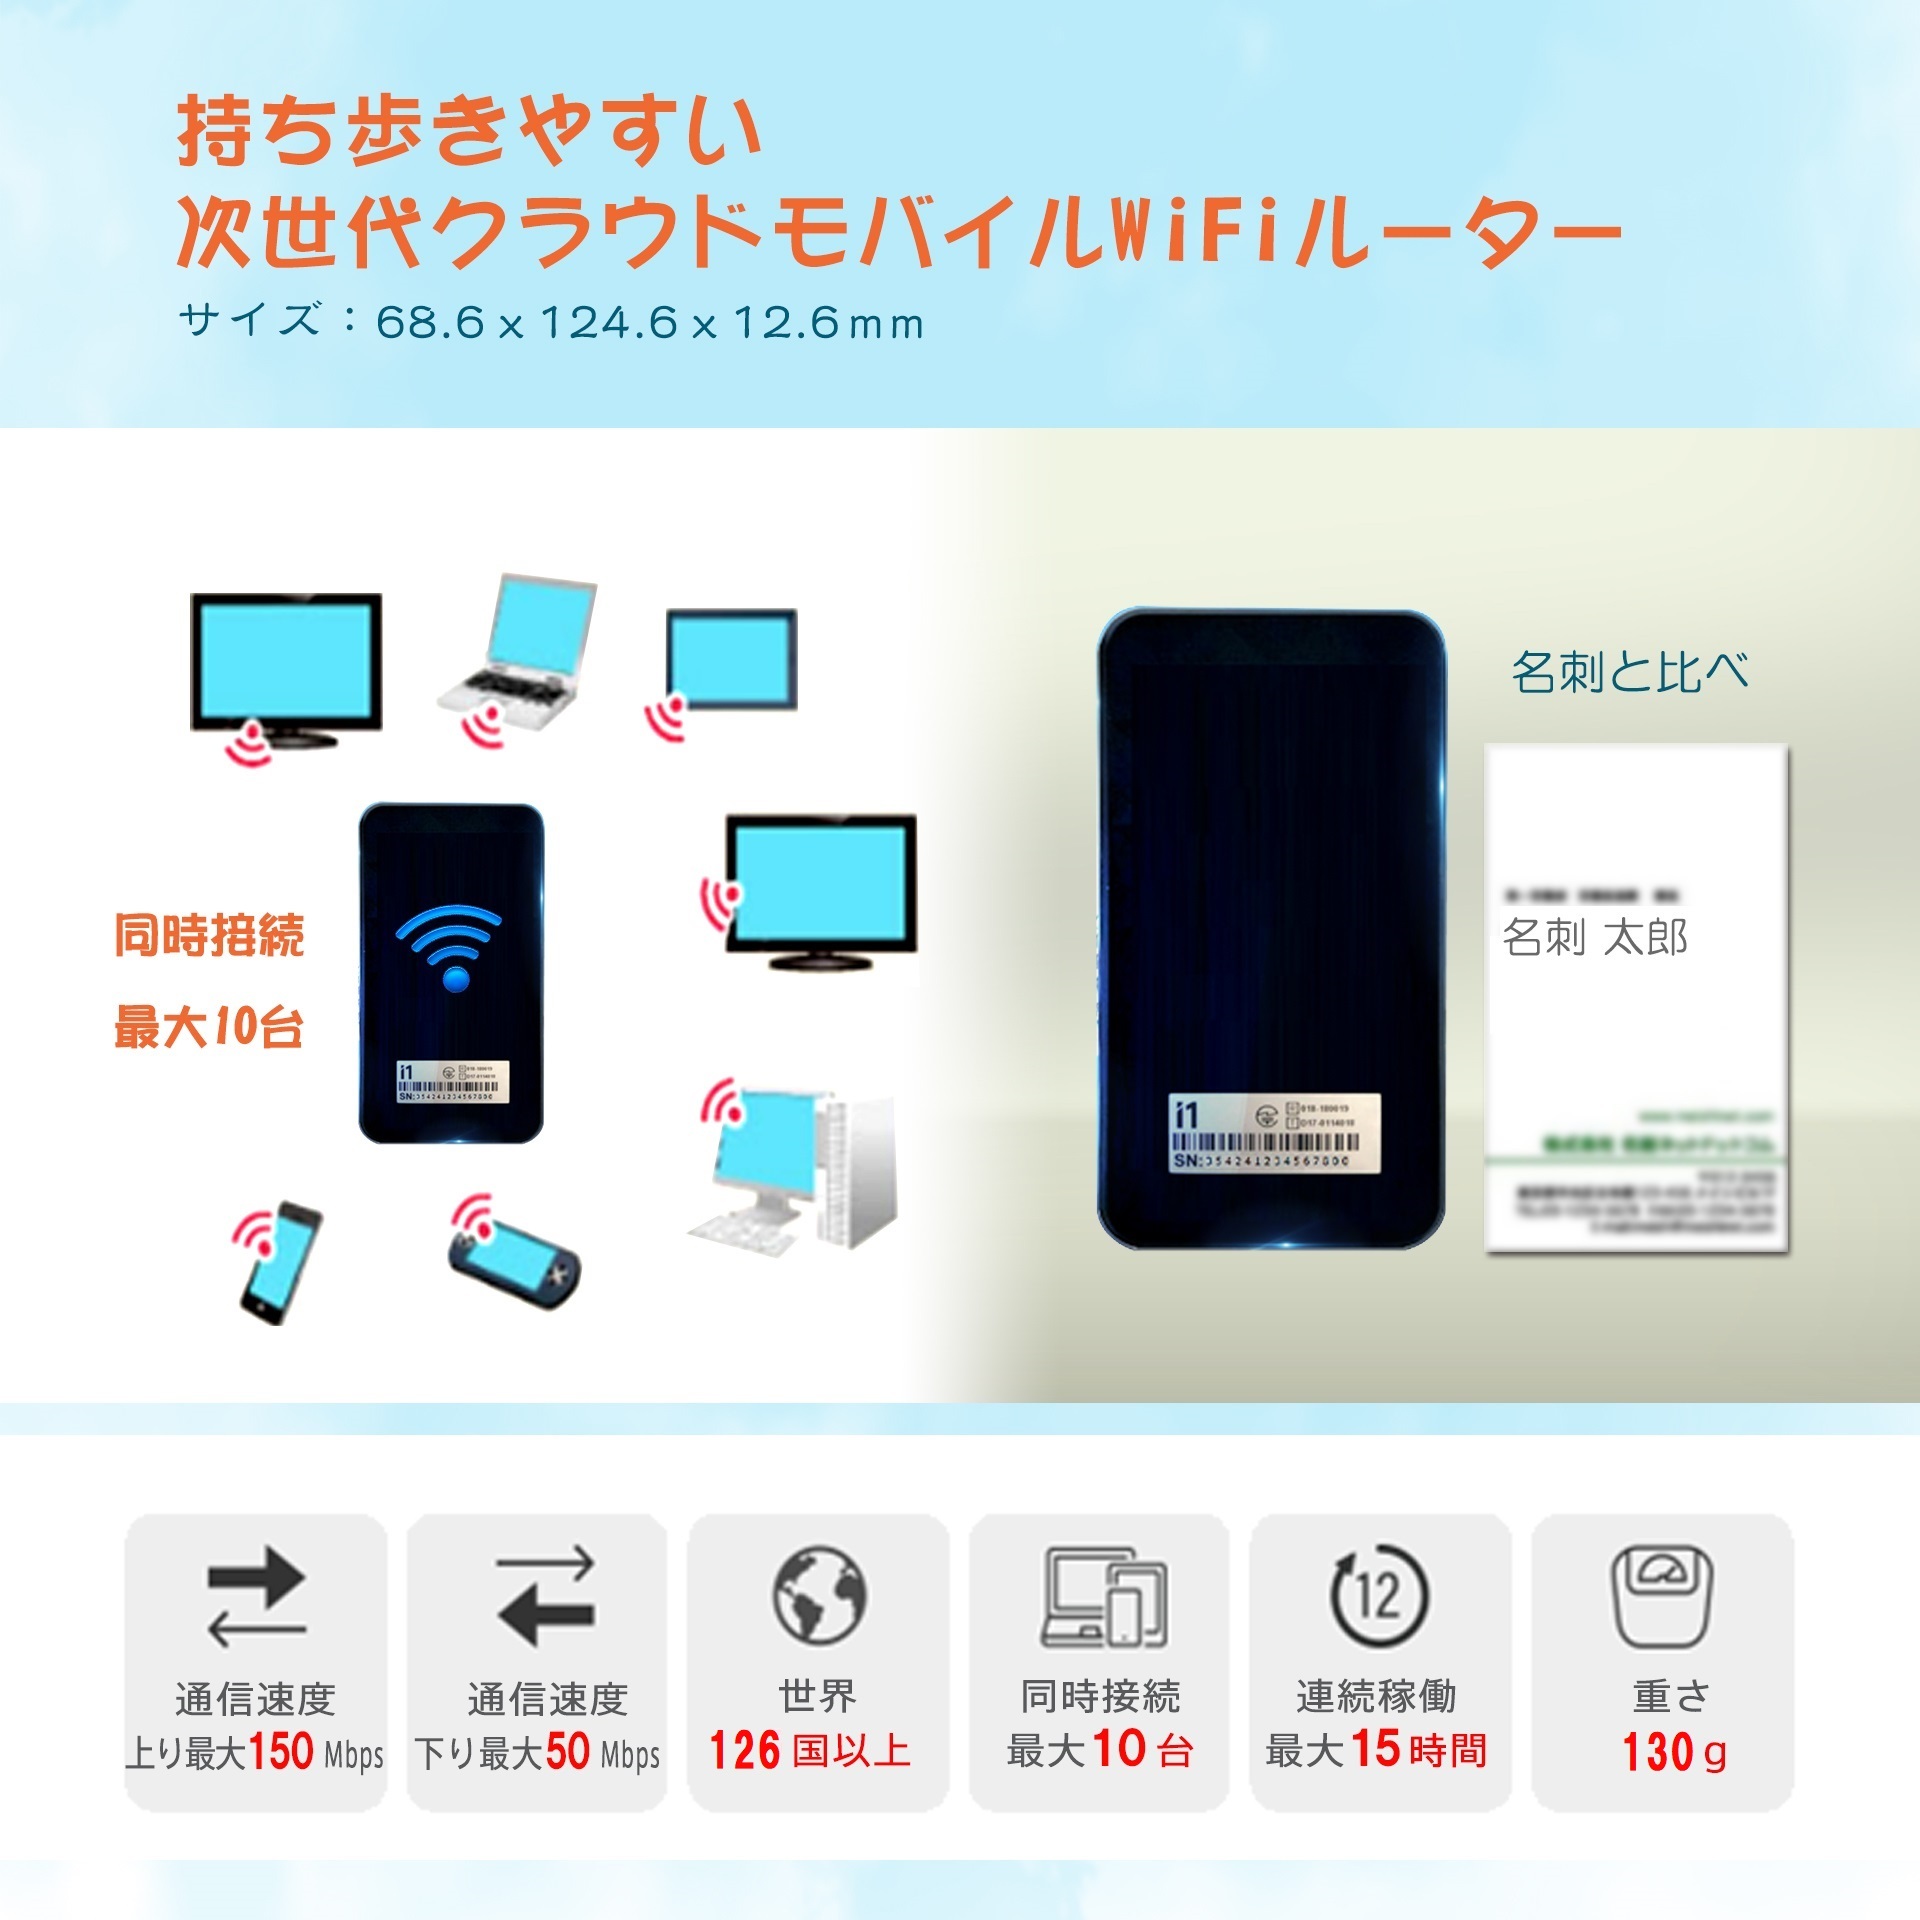 NUU konnect i1 +20GB/365日有効日本国内データ付き--U Global pocket